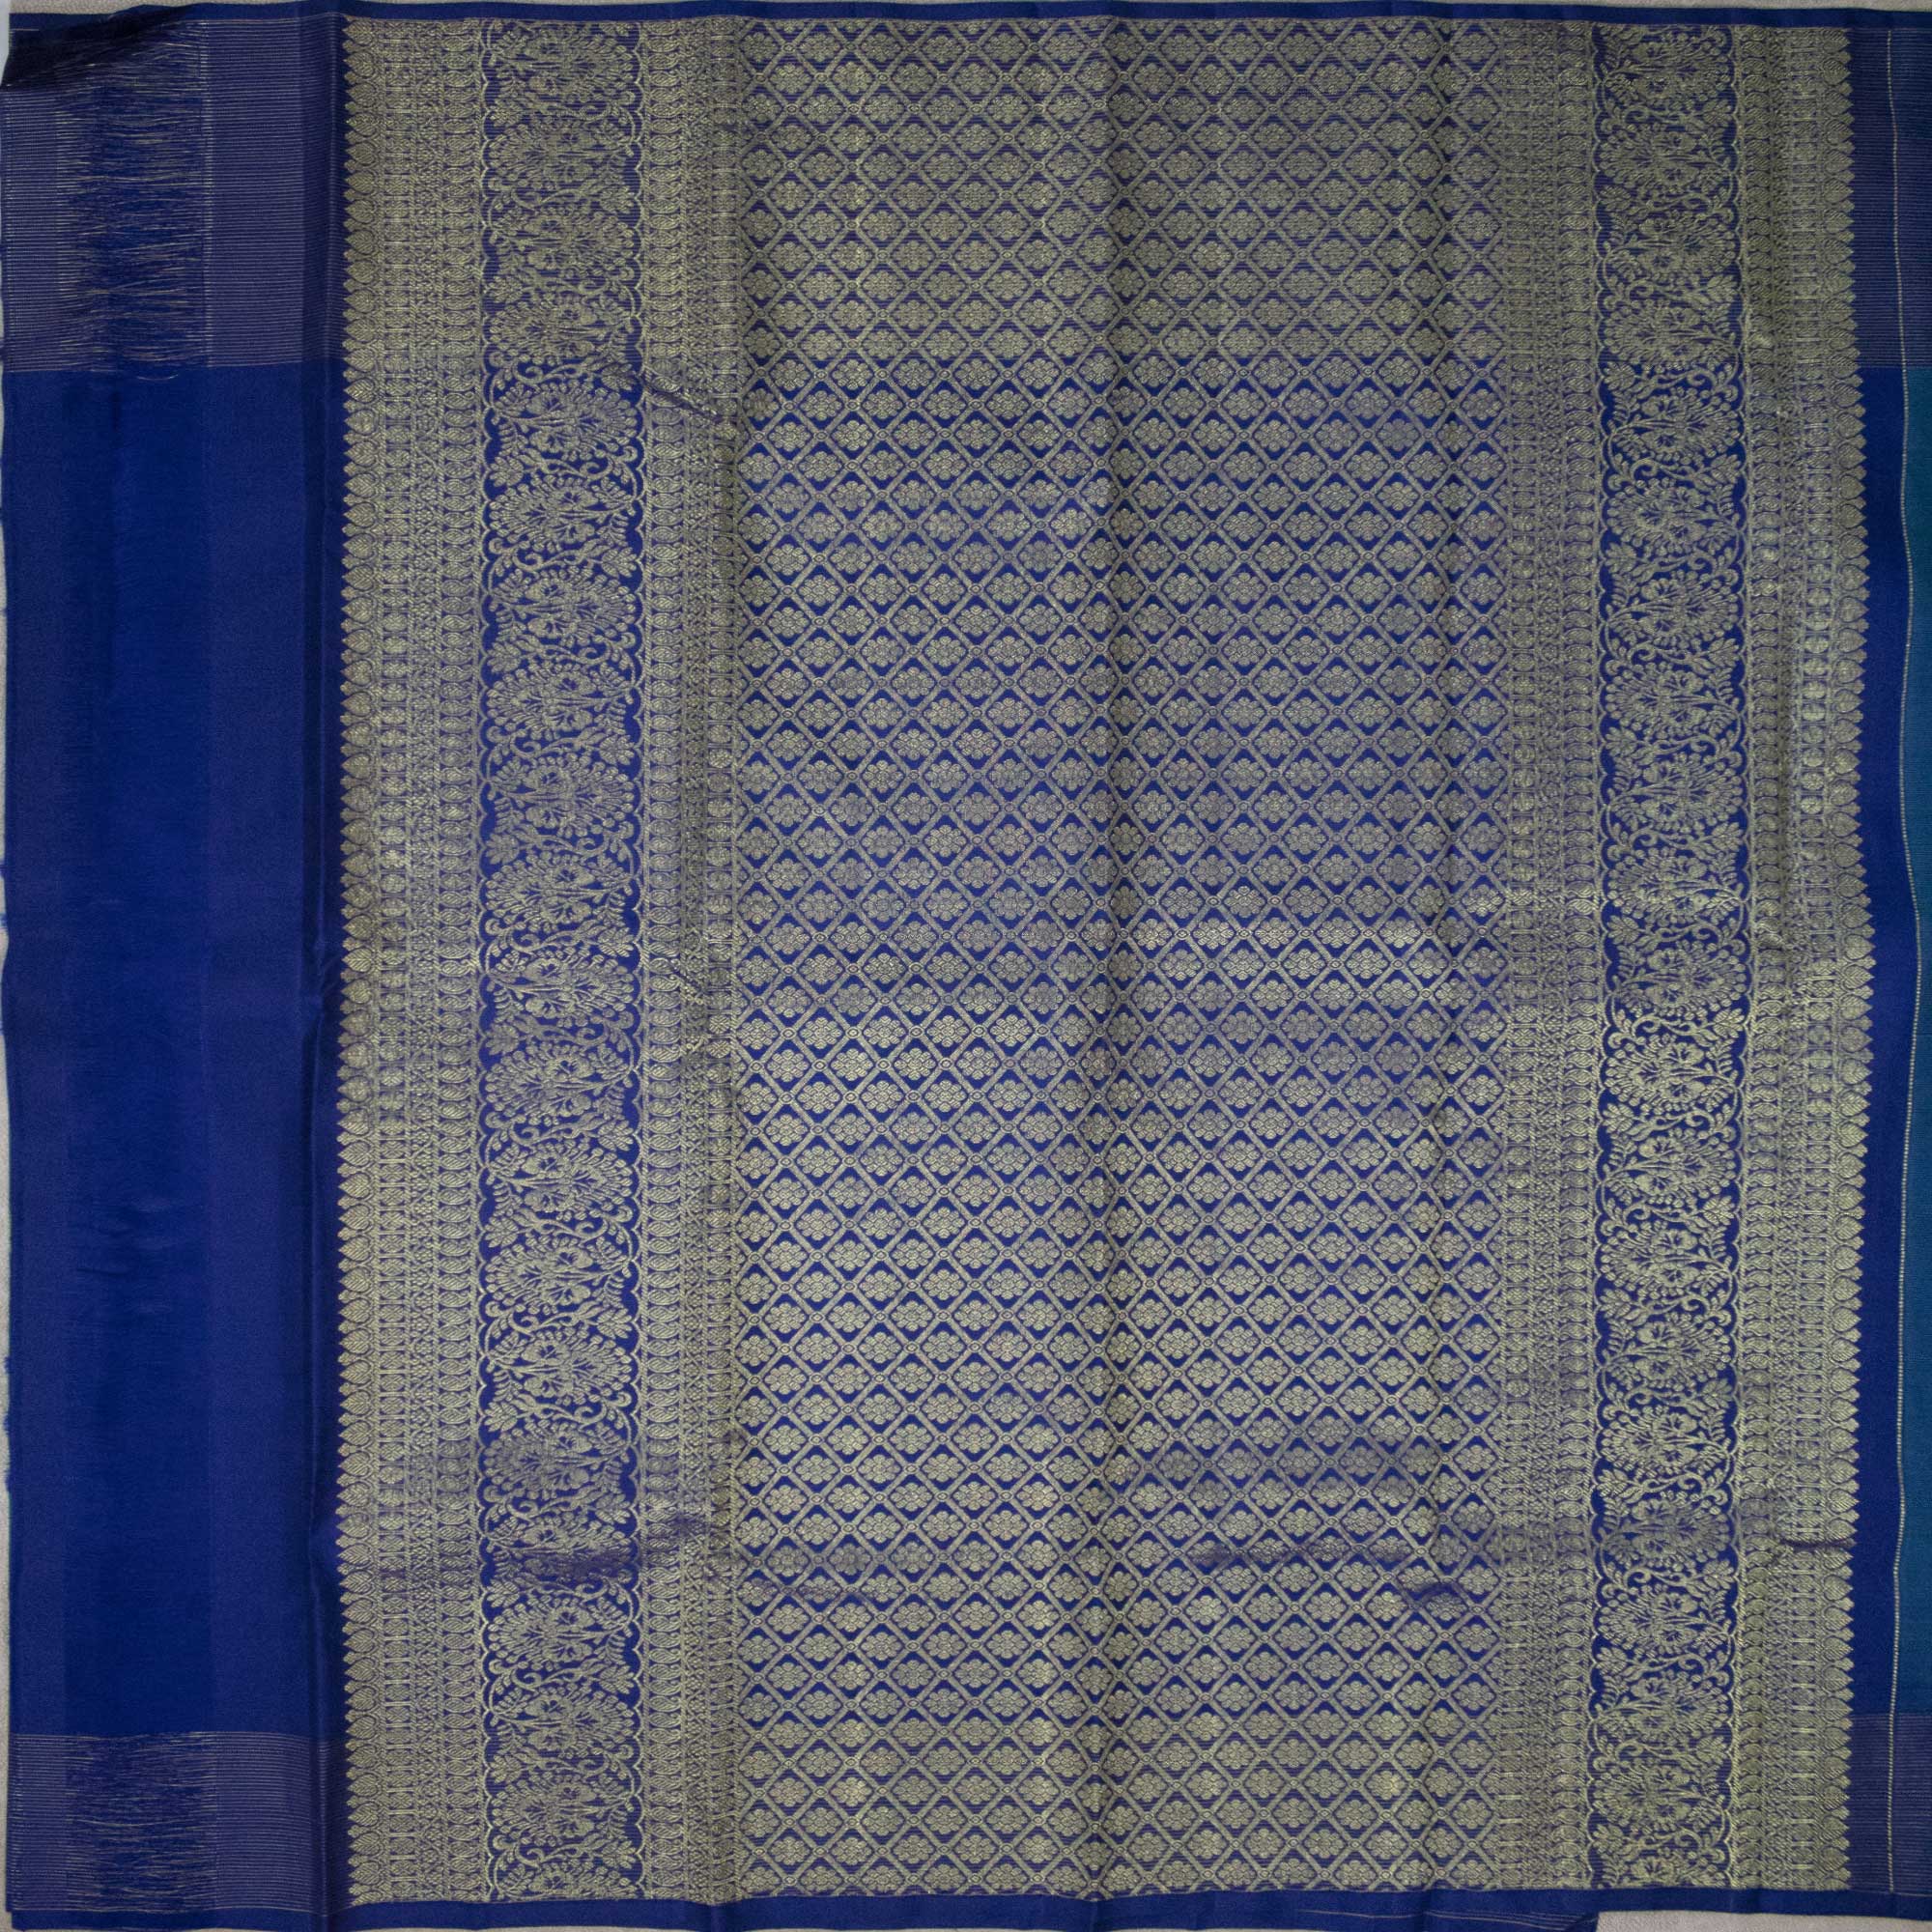 Teal Green Body, Royal Blue Border Kanjivaram Silk Sarees